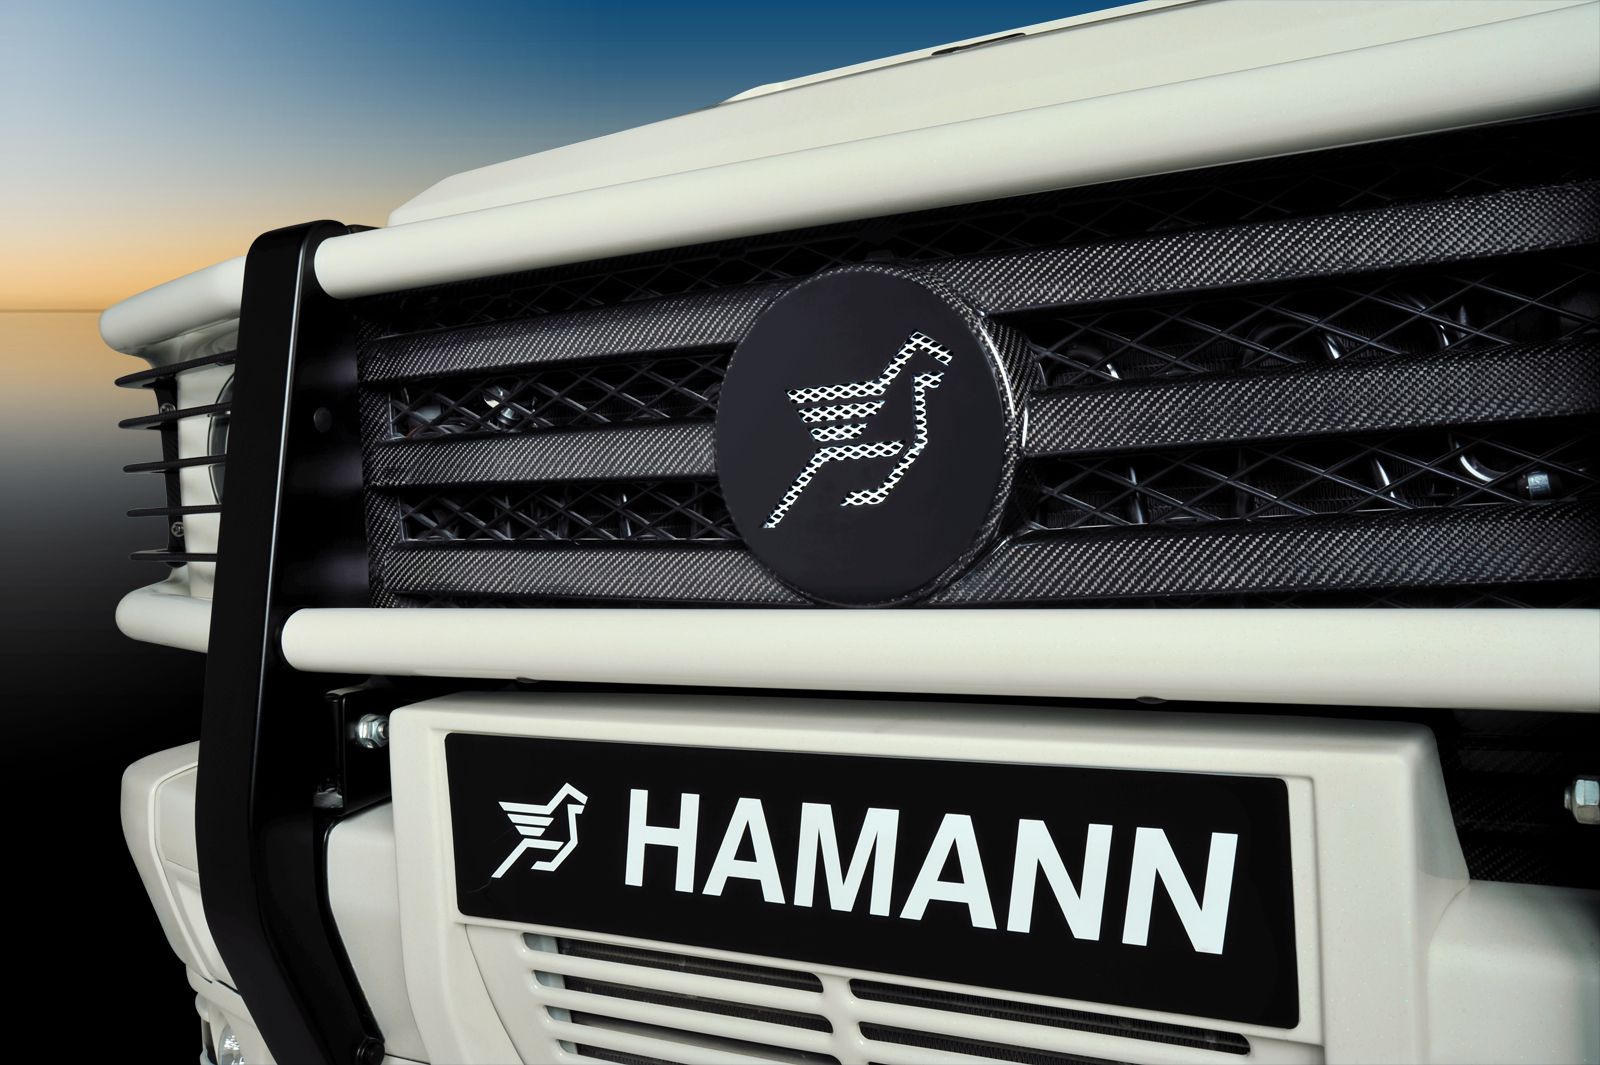 2010 Mercedes-Benz AMG G55 by Hamann